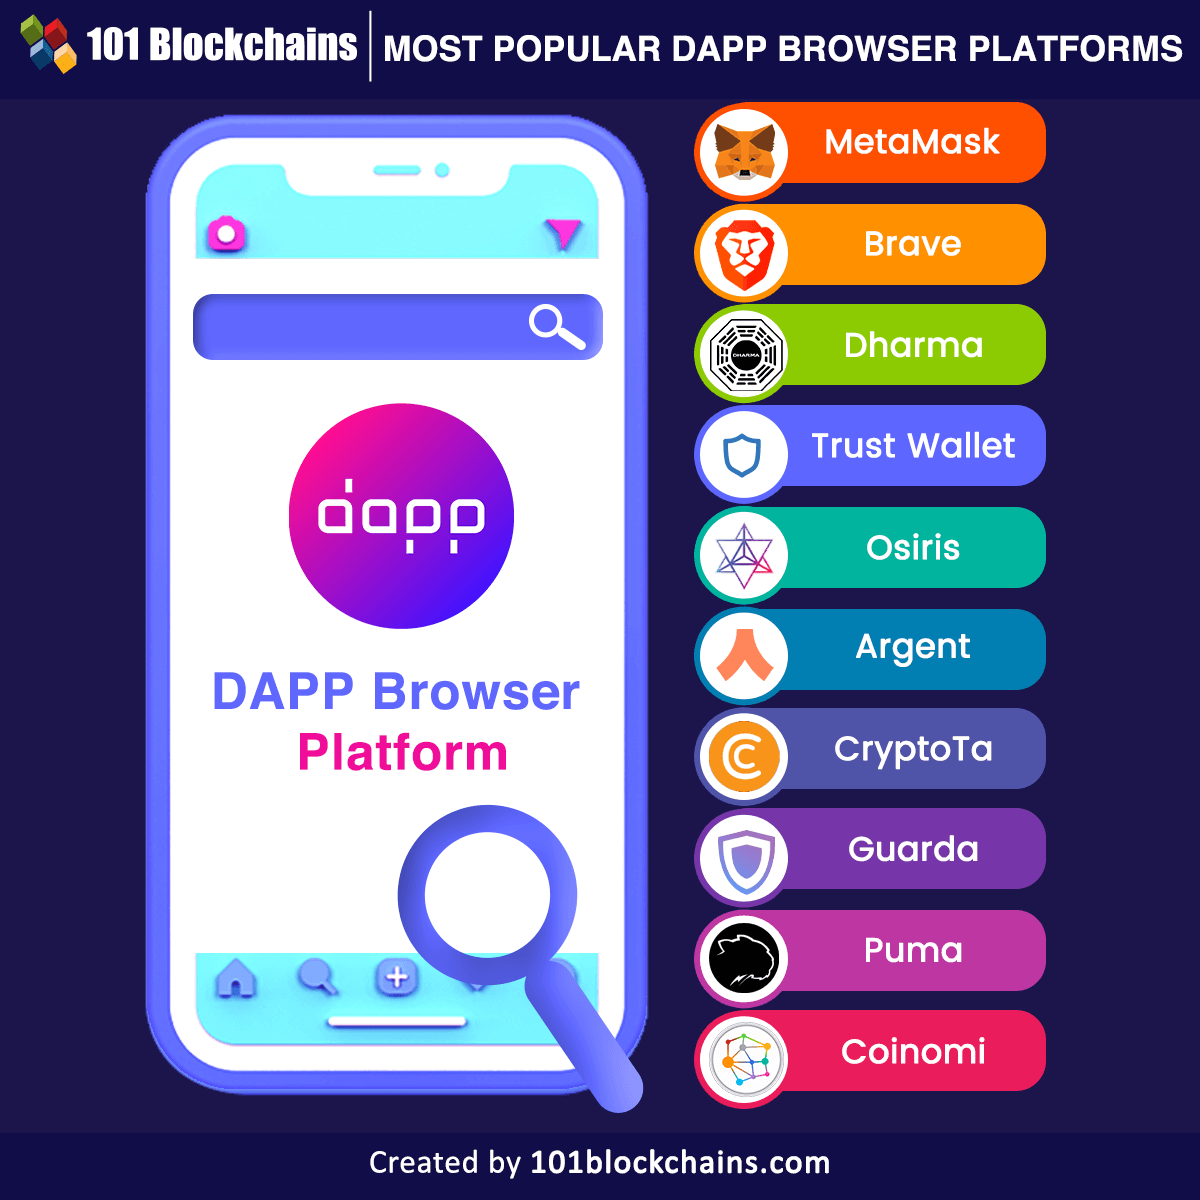 Most popular DApp Browser Platforms